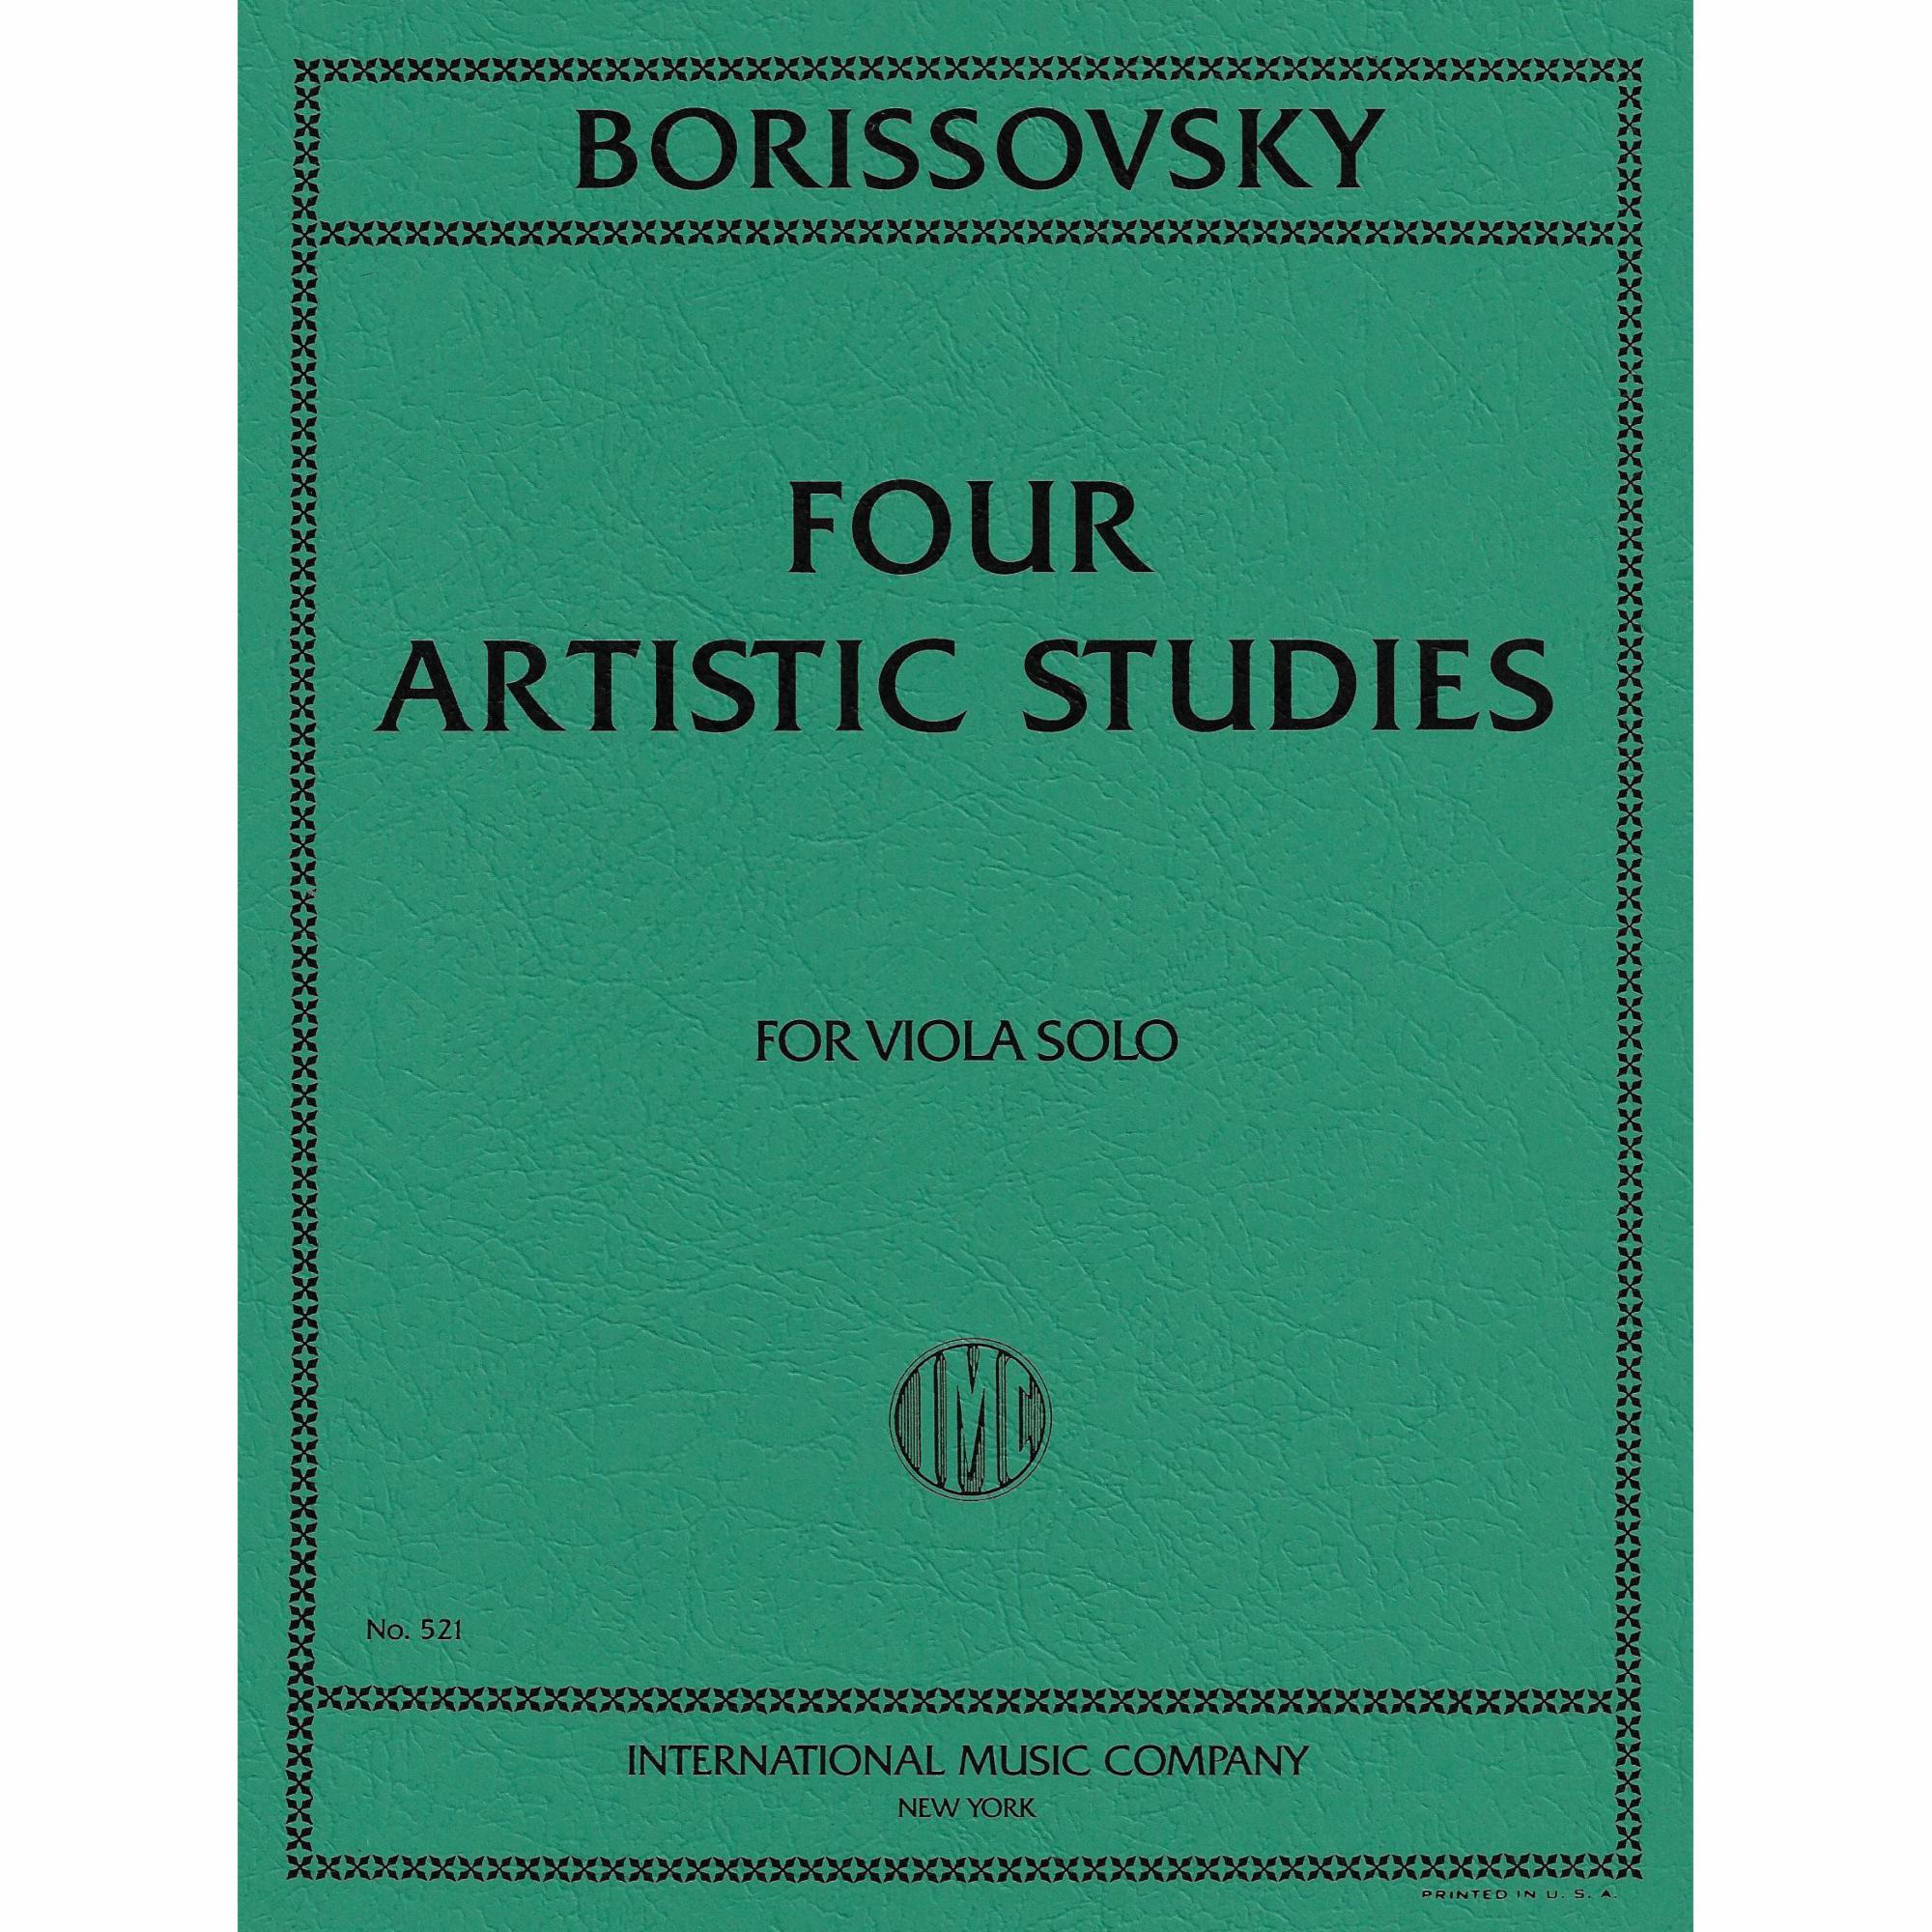 Borissovsky -- Four Artistic Studies for Viola